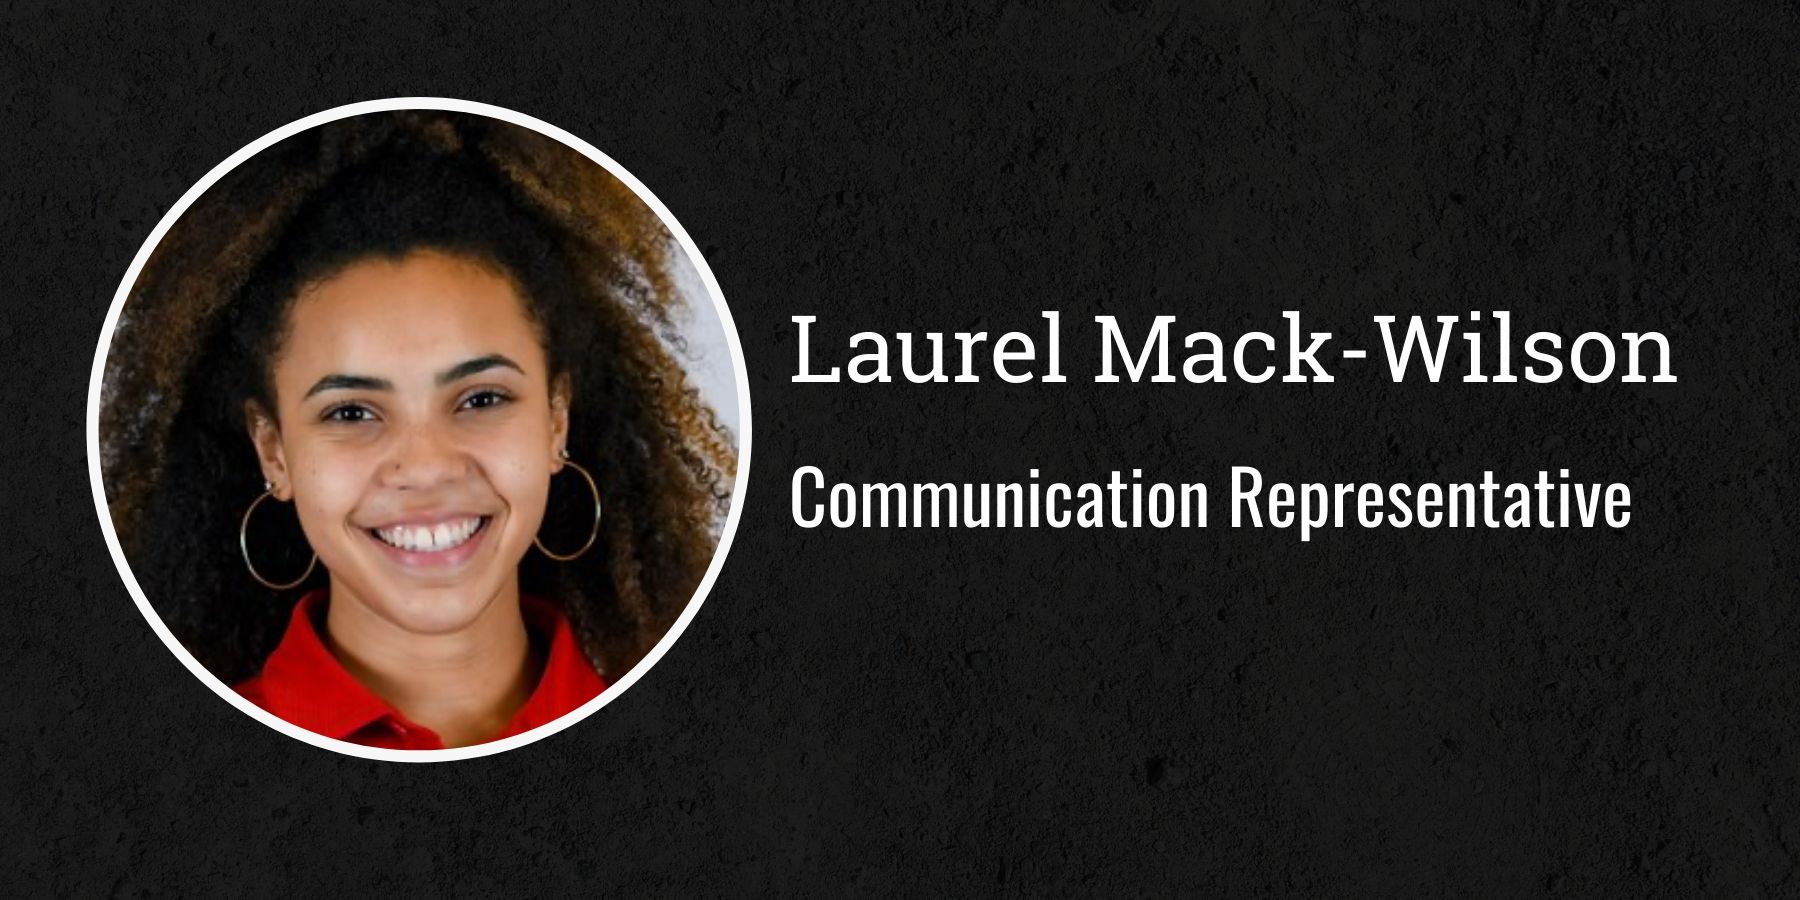 Photo of Laurel Mack-Wilson with text Communication Representative